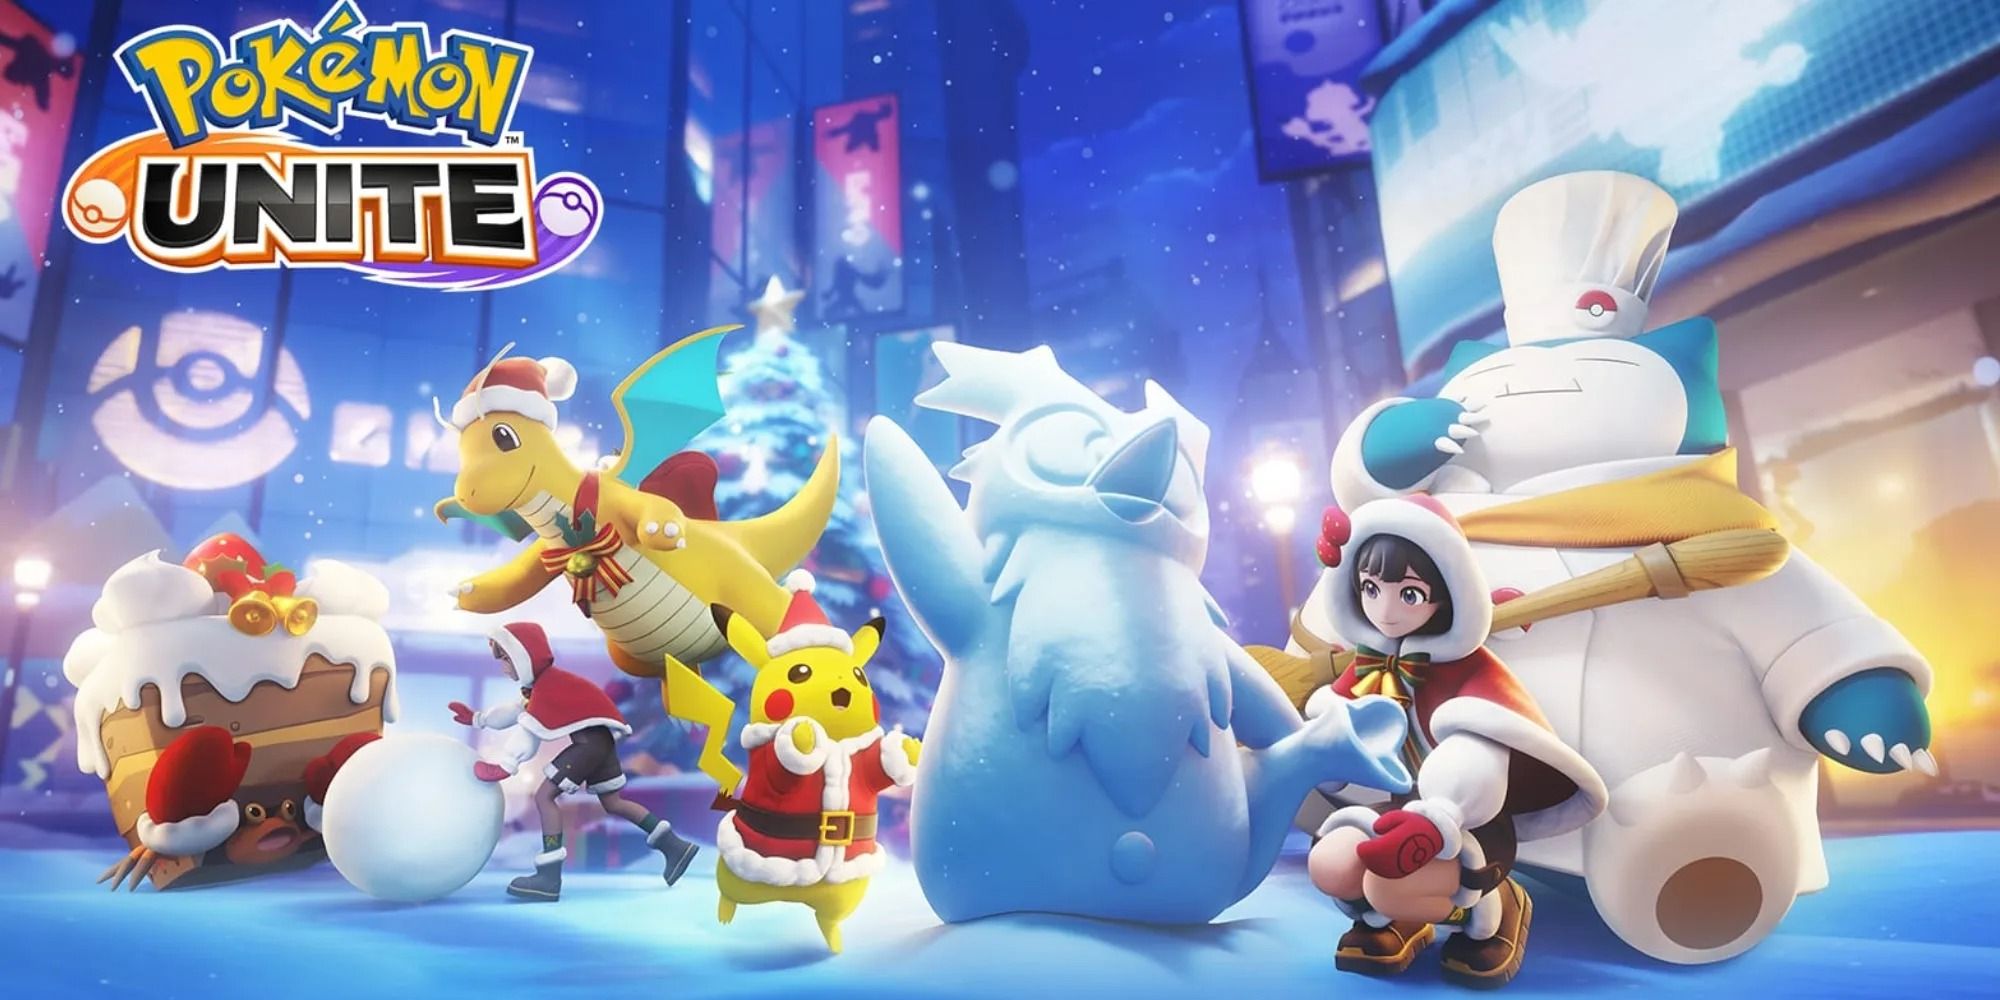 Dragonite and Festive Decorations added to Pokémon Unite